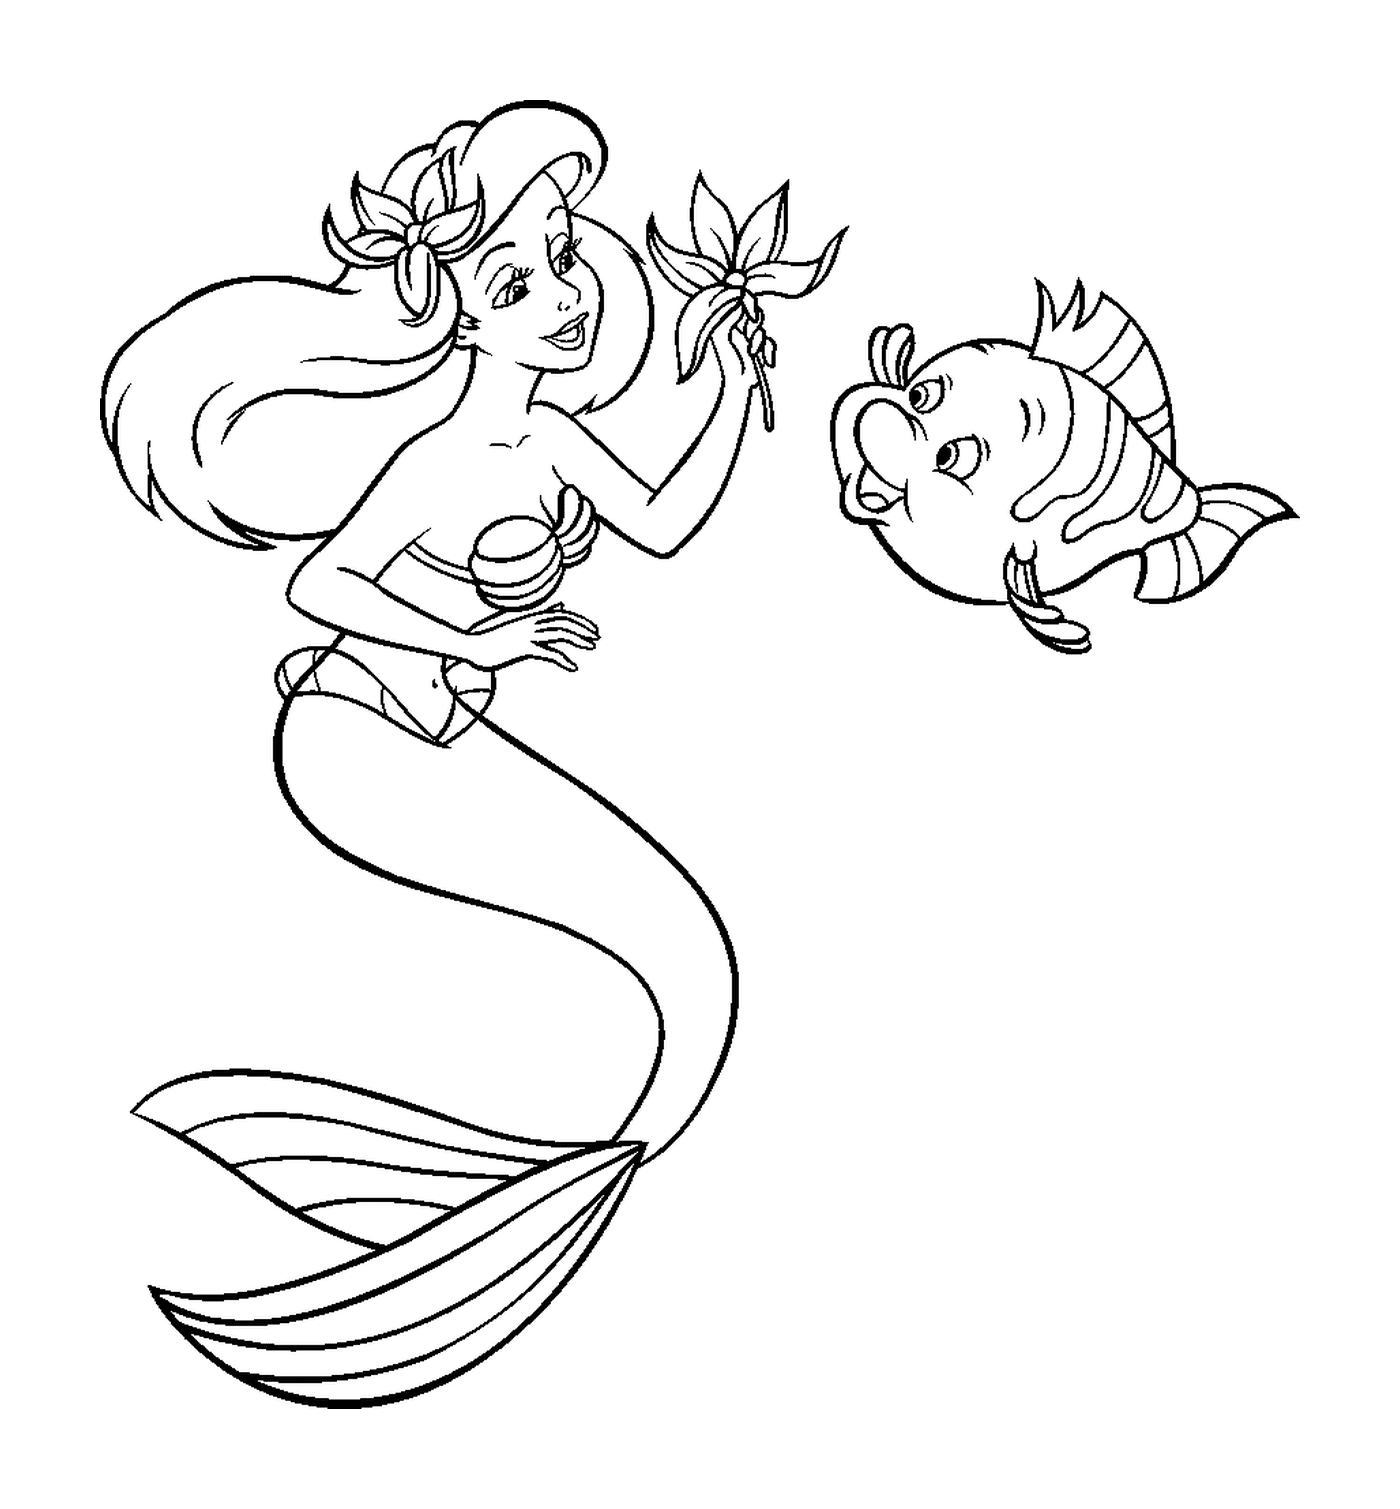  A mermaid and a fish 